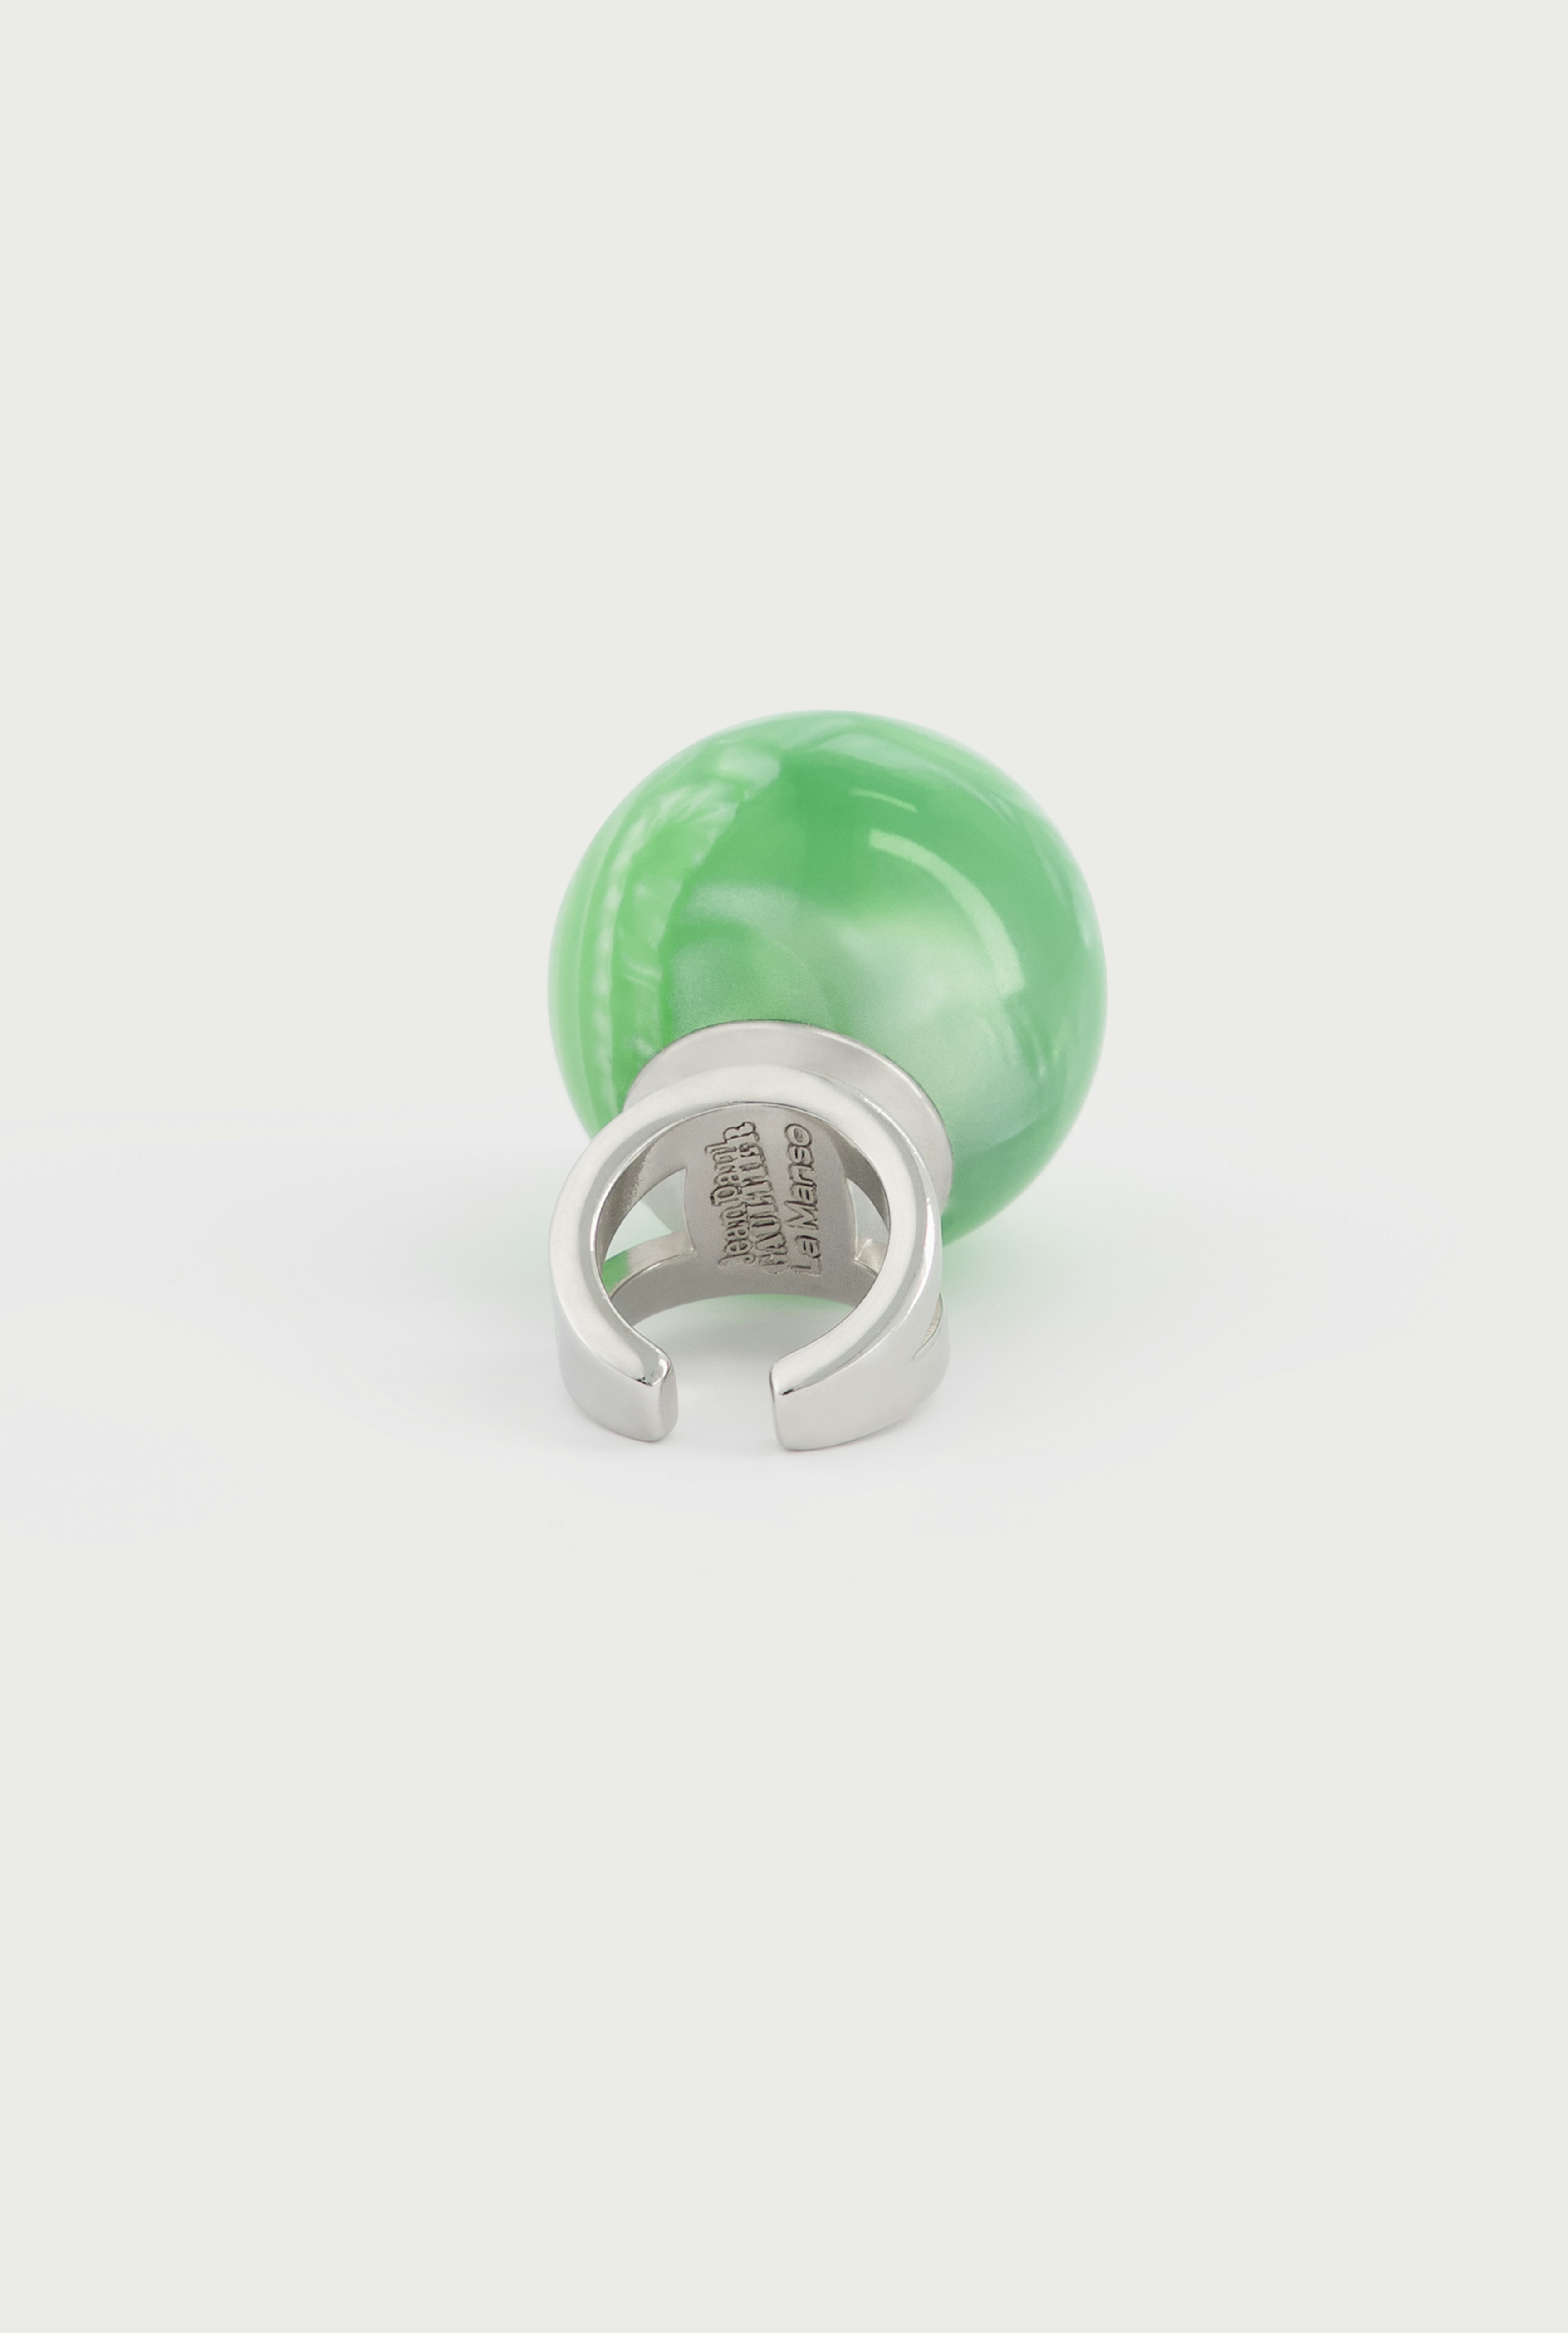 The Green Cyber Ball Ring Jean Paul Gaultier x La Manso